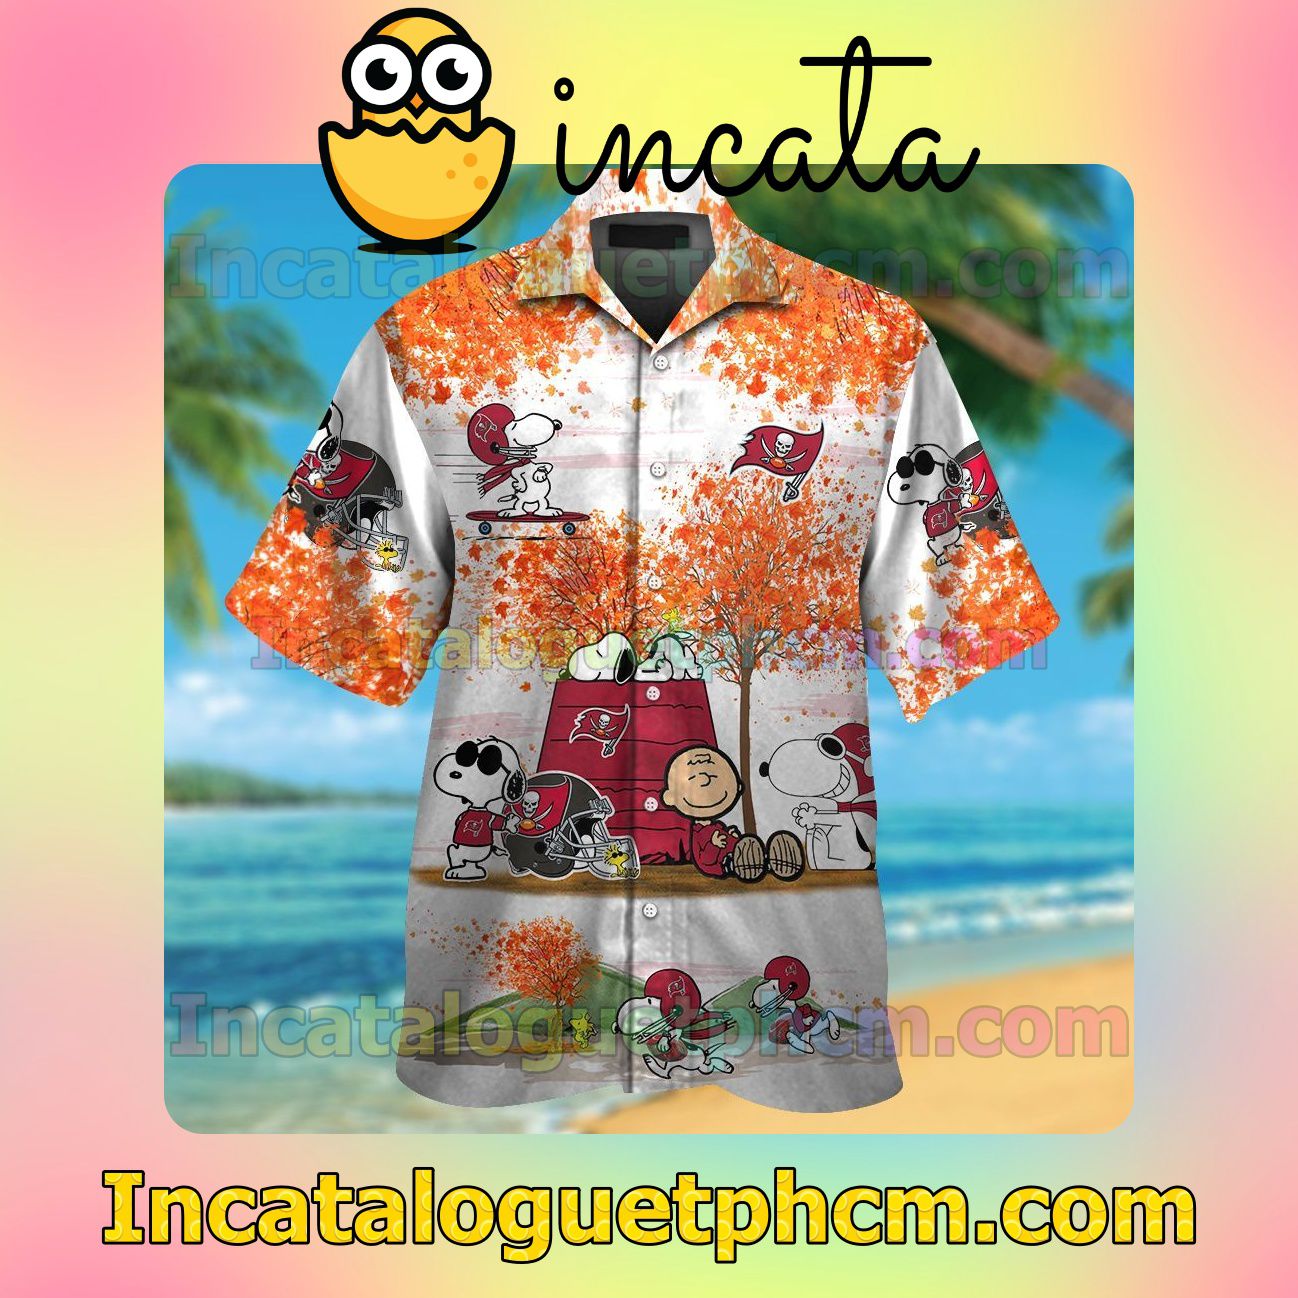 Tampa Bay Buccaneers Snoopy Autumn Beach Vacation Shirt, Swim Shorts